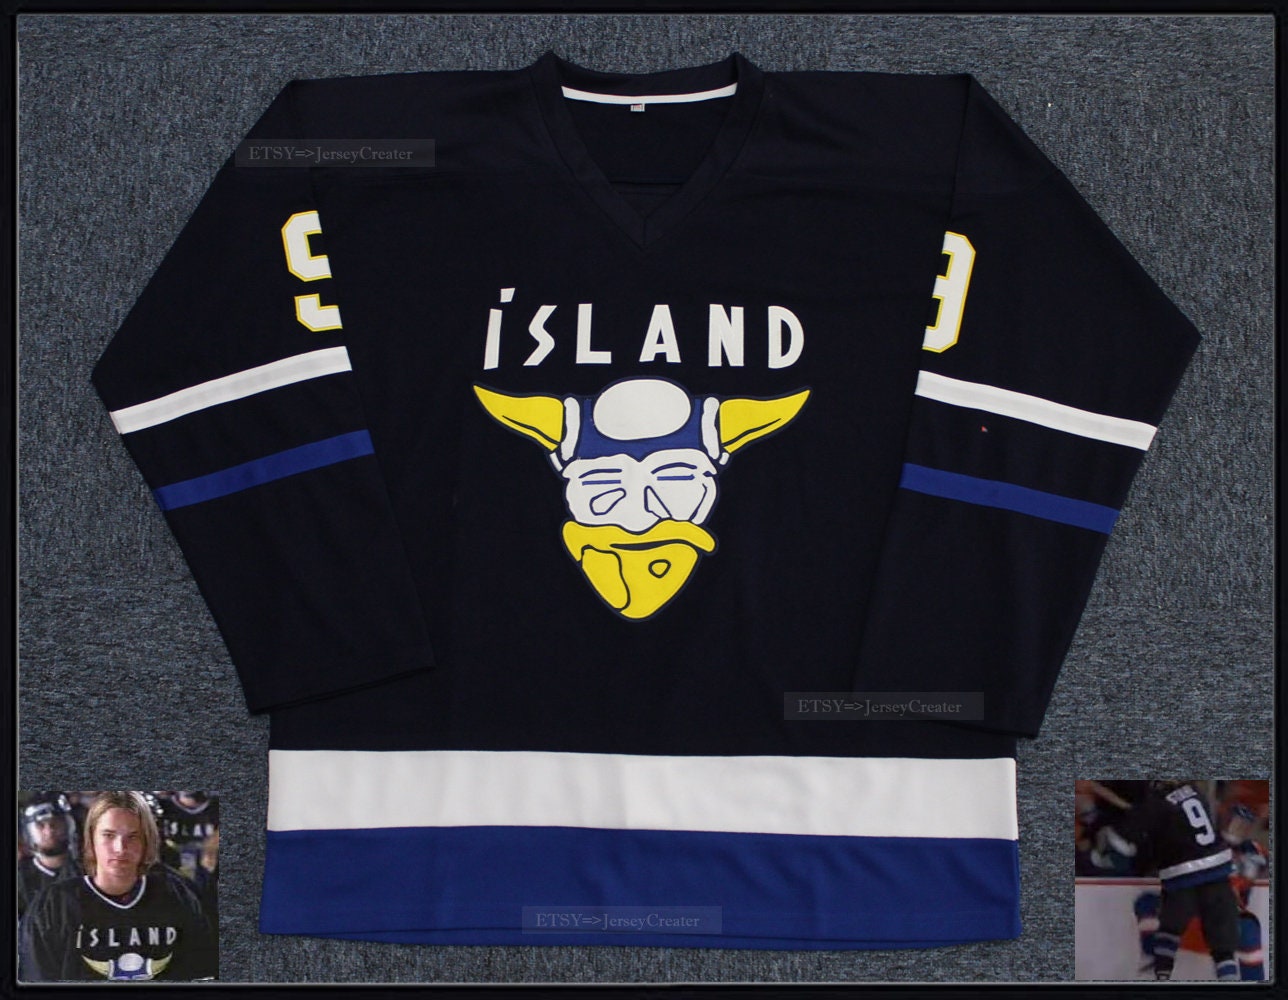 Mighty Ducks Conway Hockey Jersey  Clothes design, Fashion design